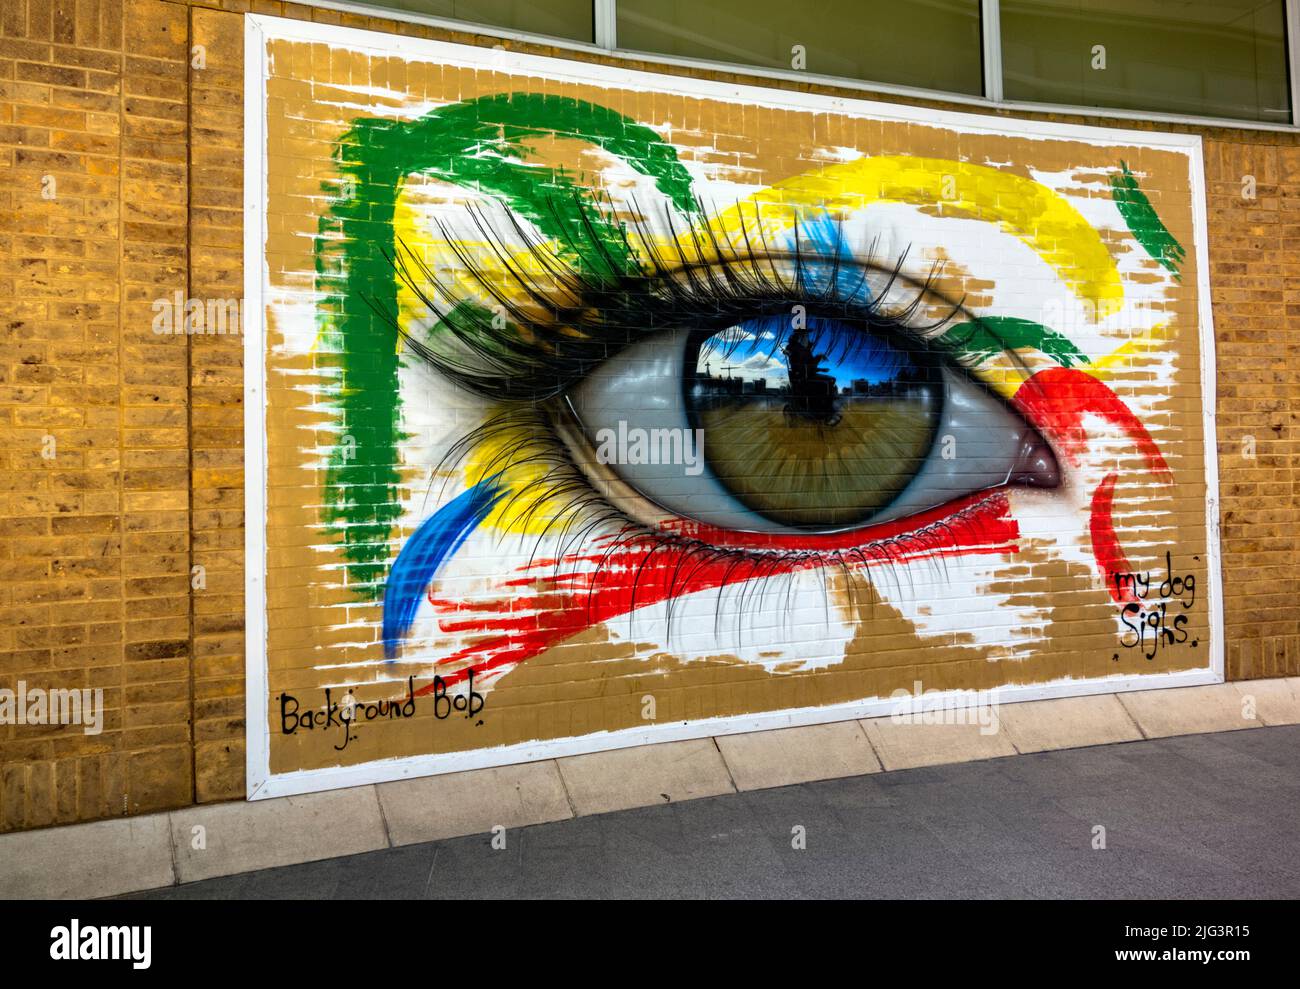 Murale di strada creativo con iris of an eye di background Bob e My Dog Sosphs, Southampton Westquay UK Foto Stock